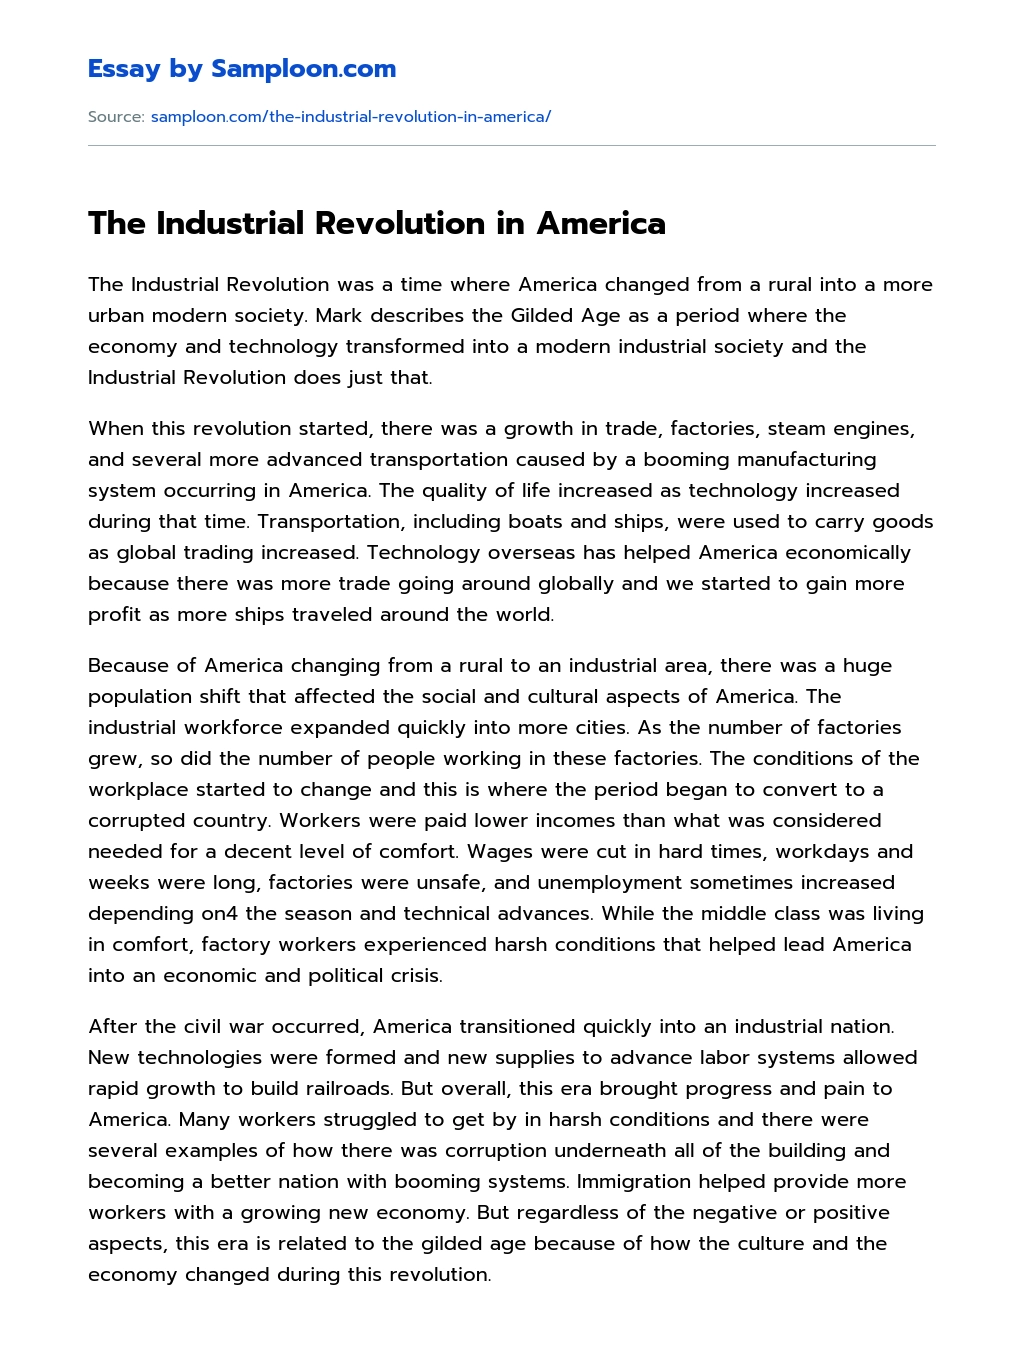 The Industrial Revolution in America essay